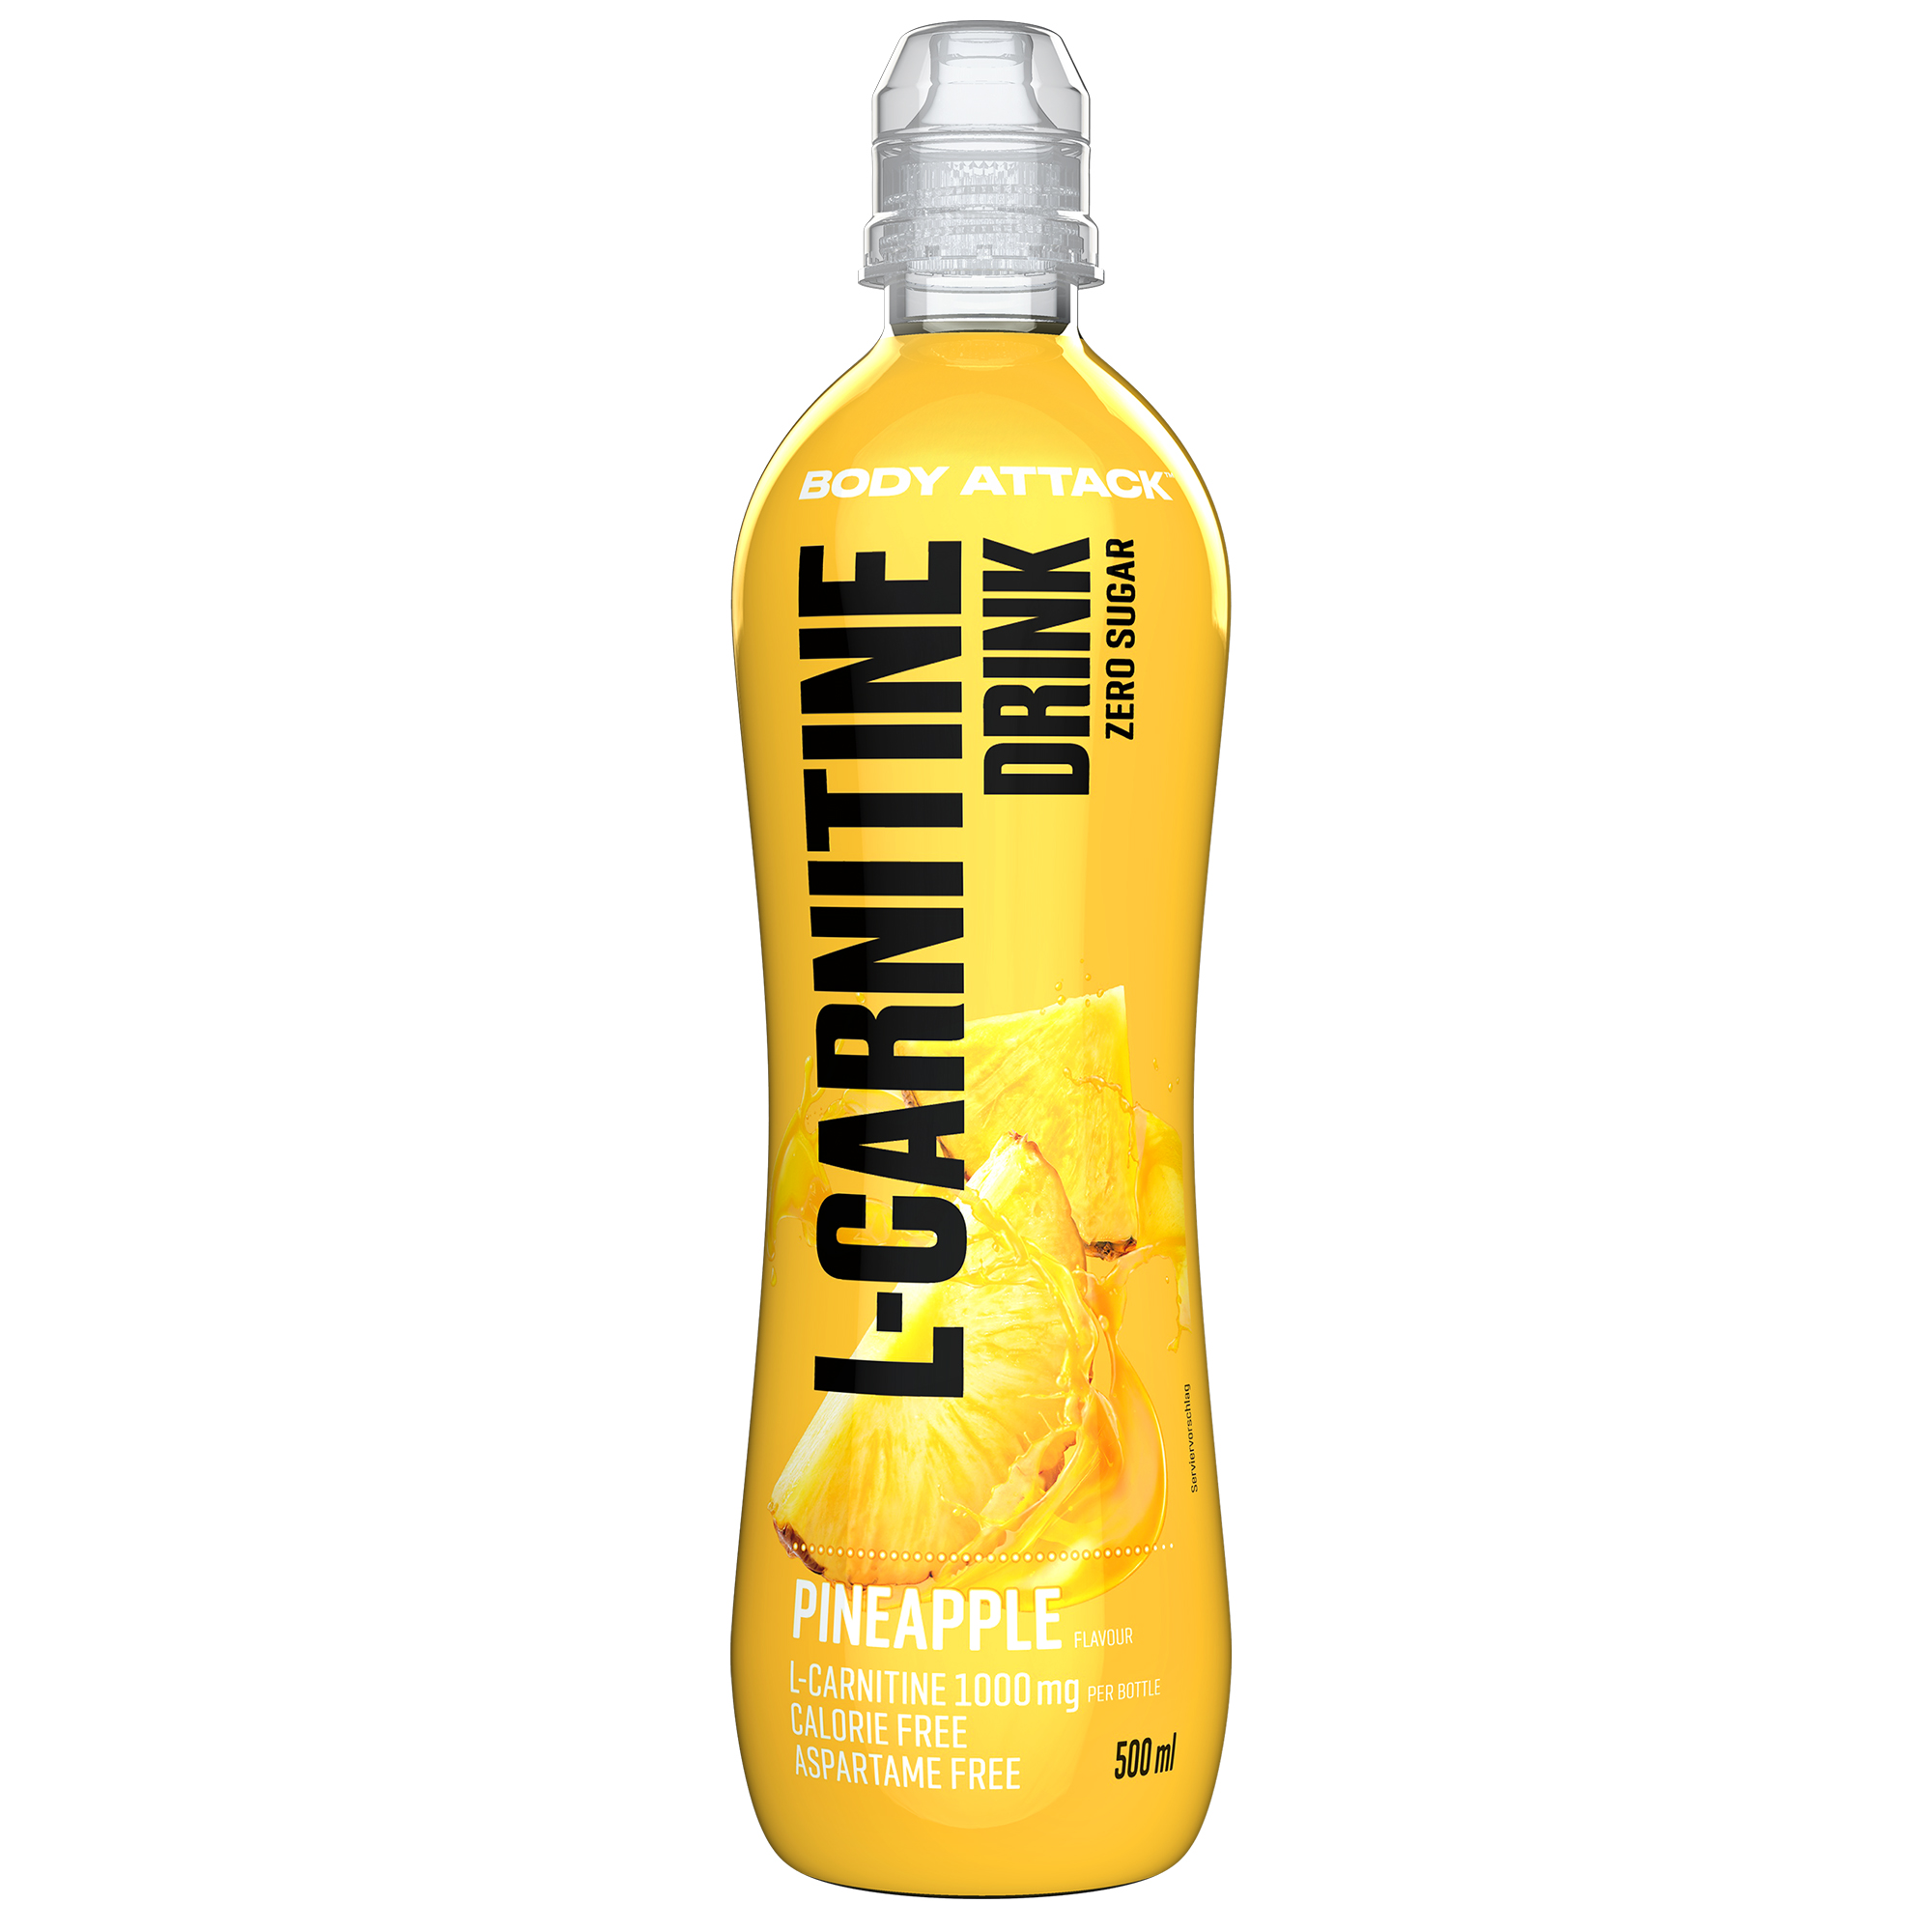 Body Attack L-Carnitine Drink (500ml)